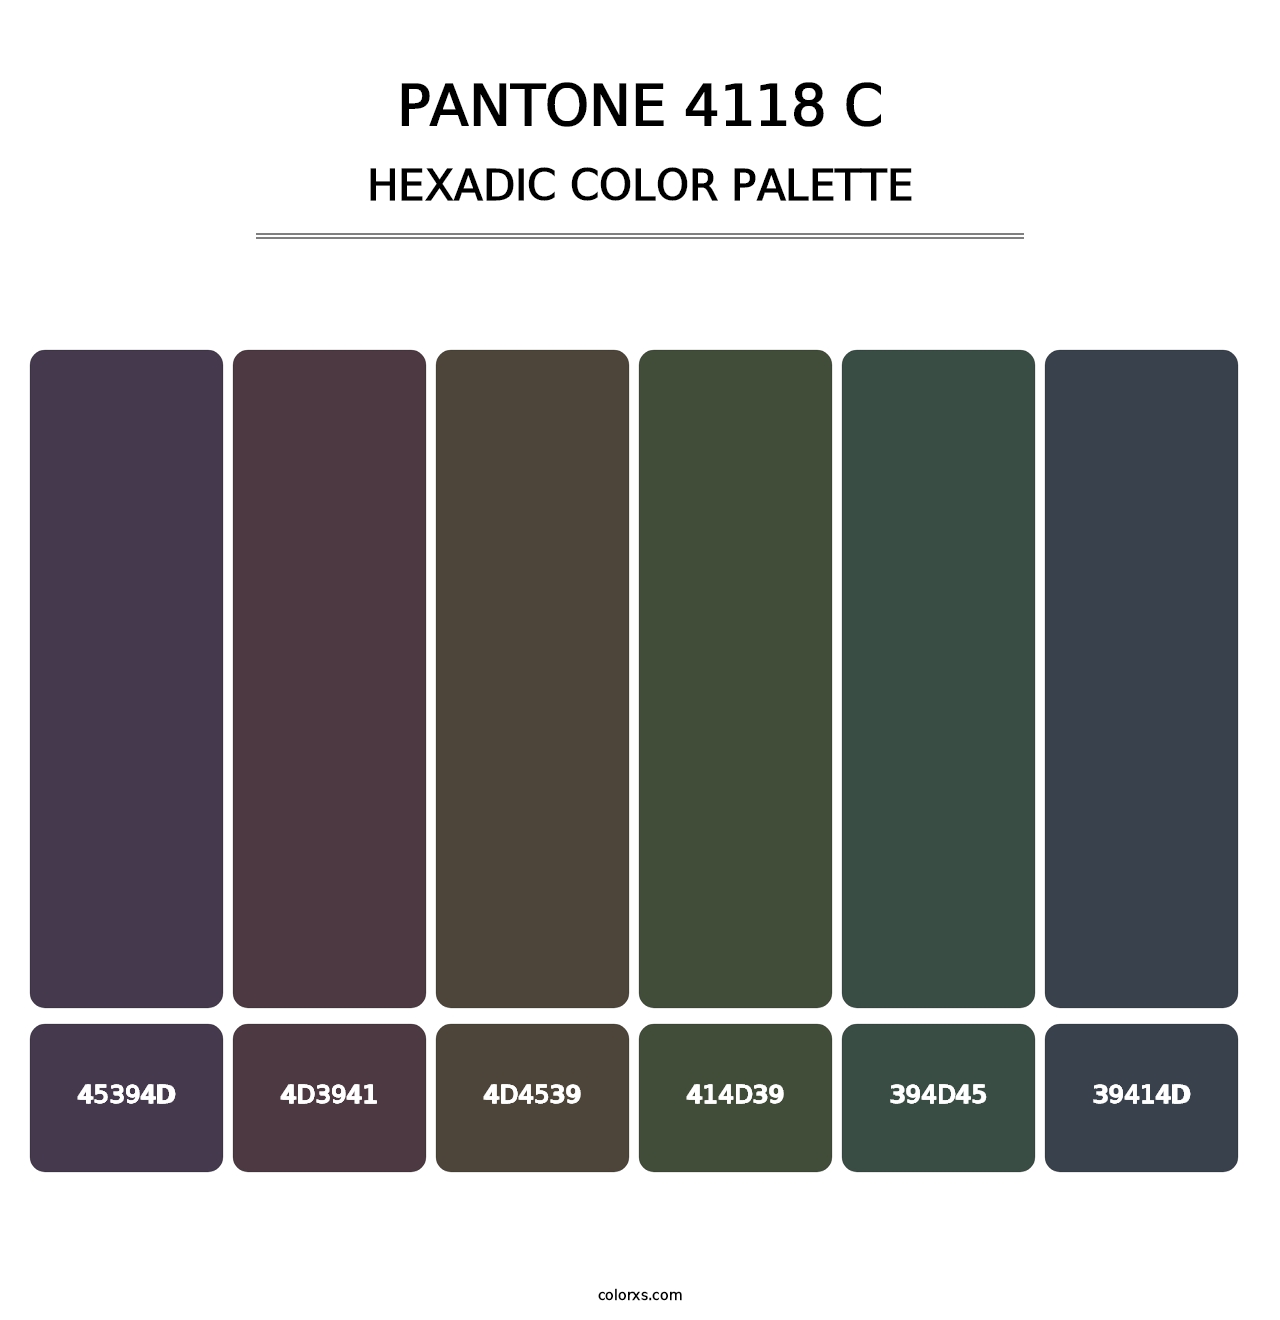 PANTONE 4118 C - Hexadic Color Palette